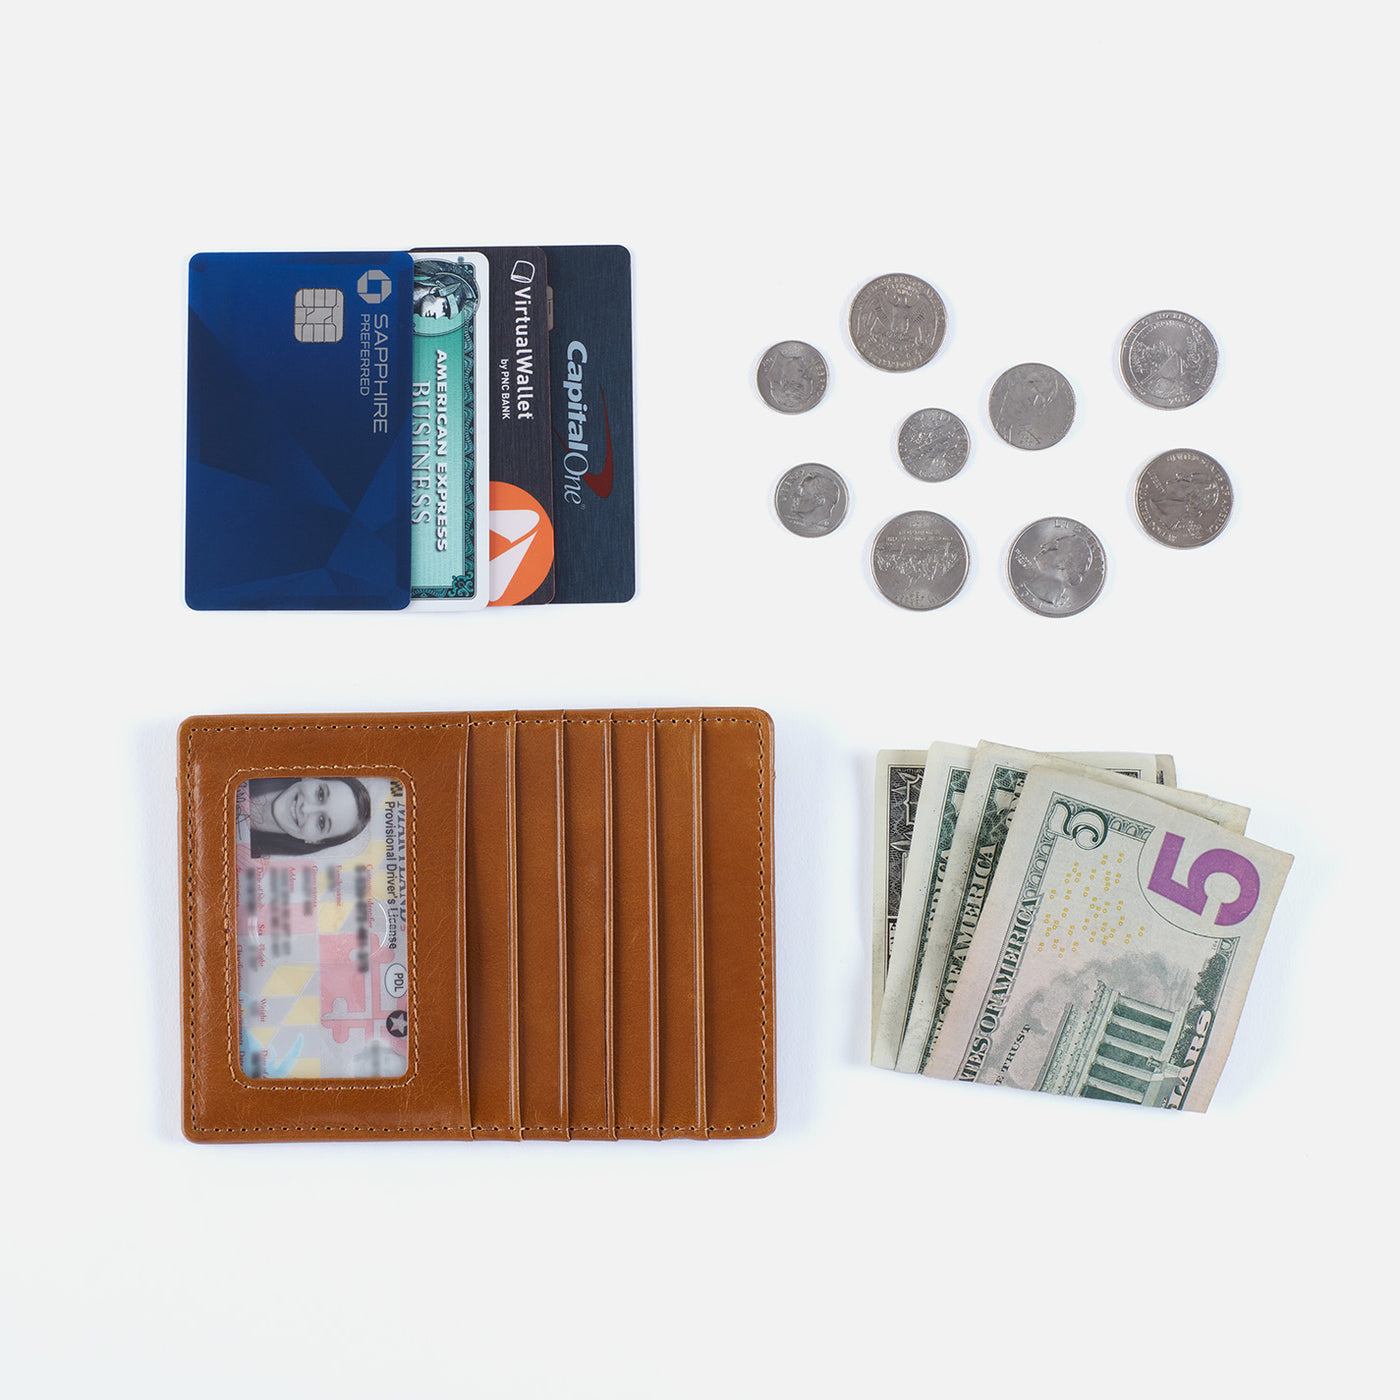 Euro Slide Card Case in Polished Leather - Light Grey